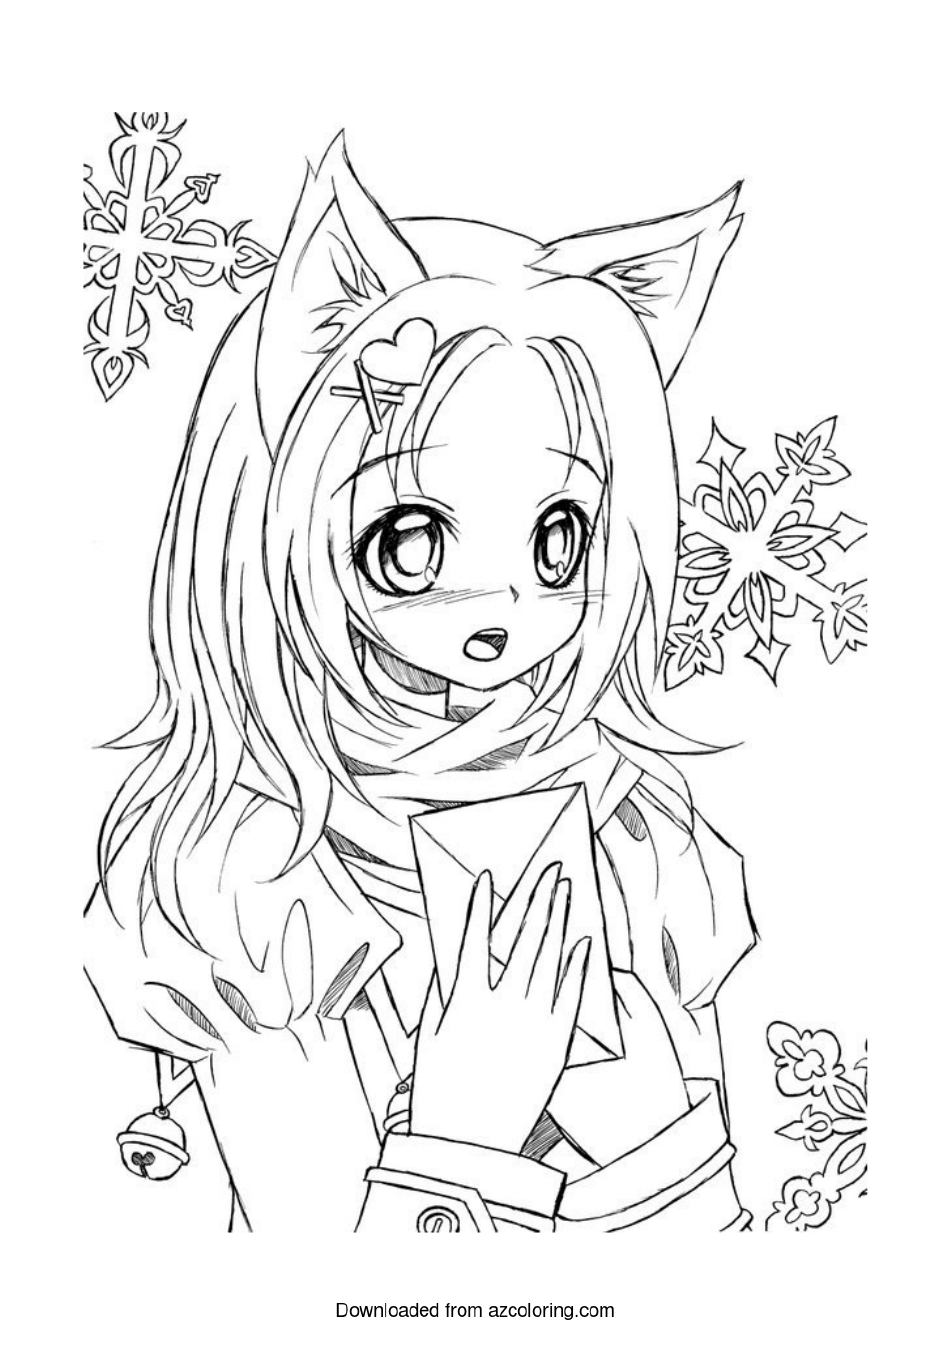 Anime girl coloring page - Mimi Panda